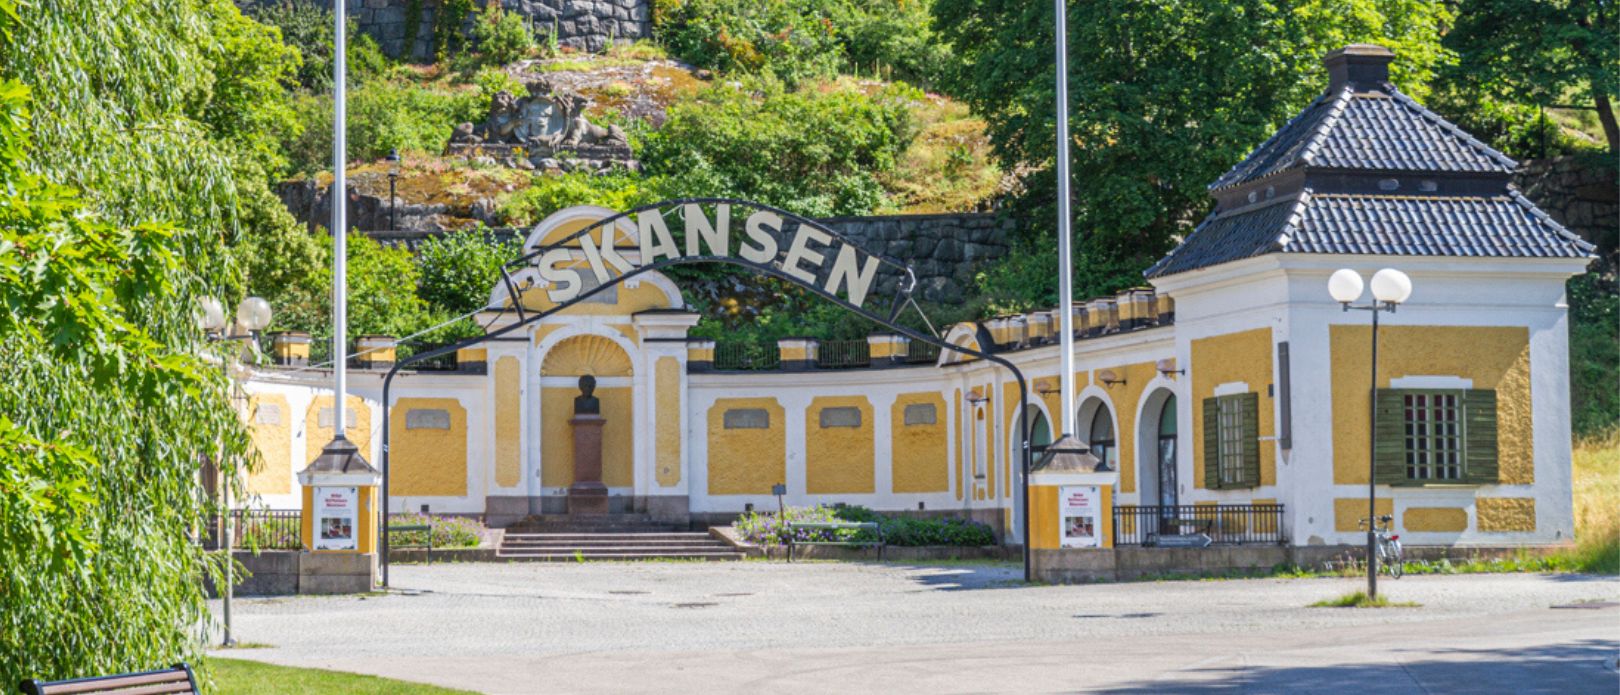 Entrance to the Skansen open-air museum